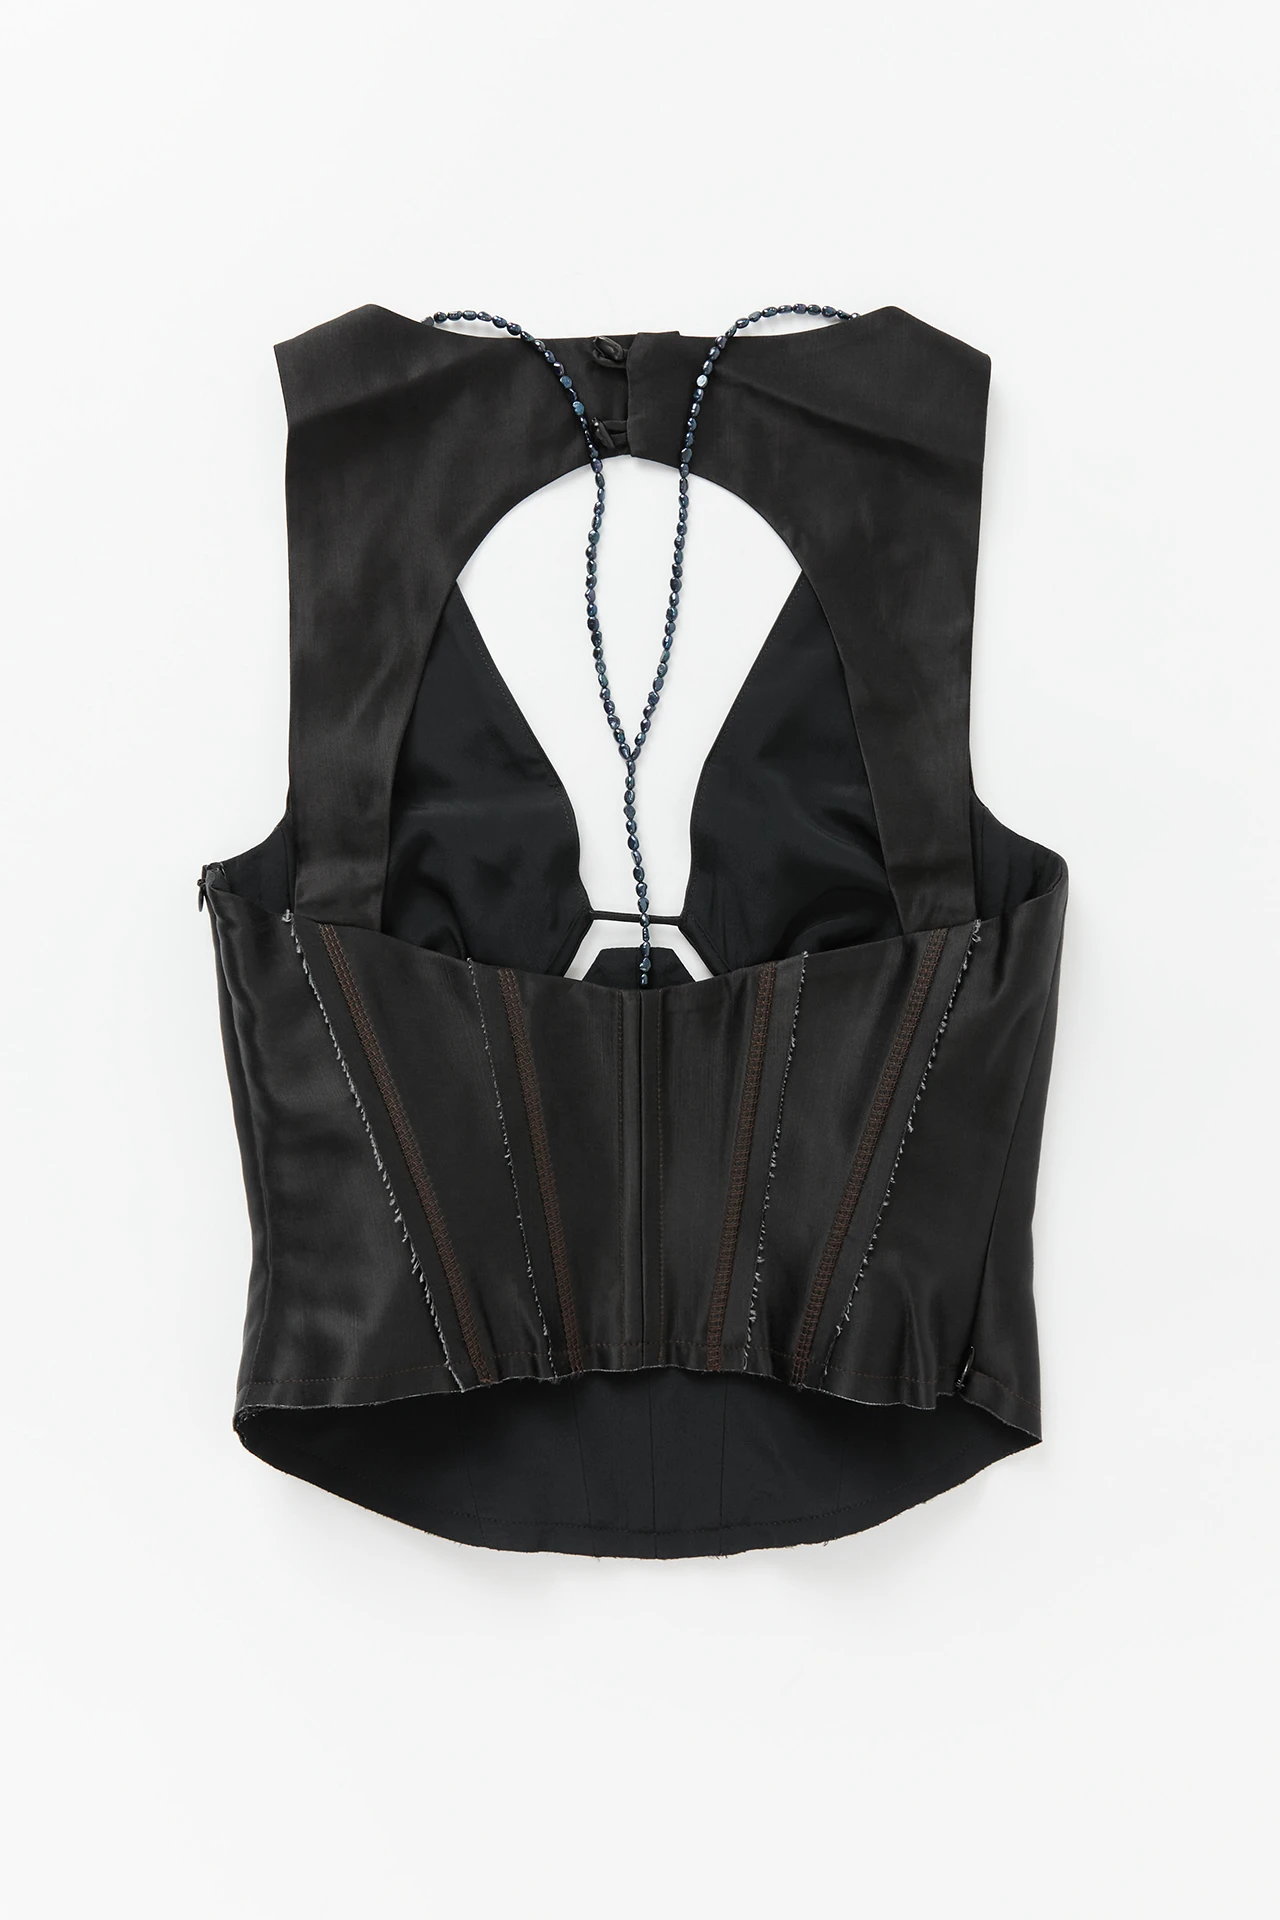 miista-elisa-black-corset-2